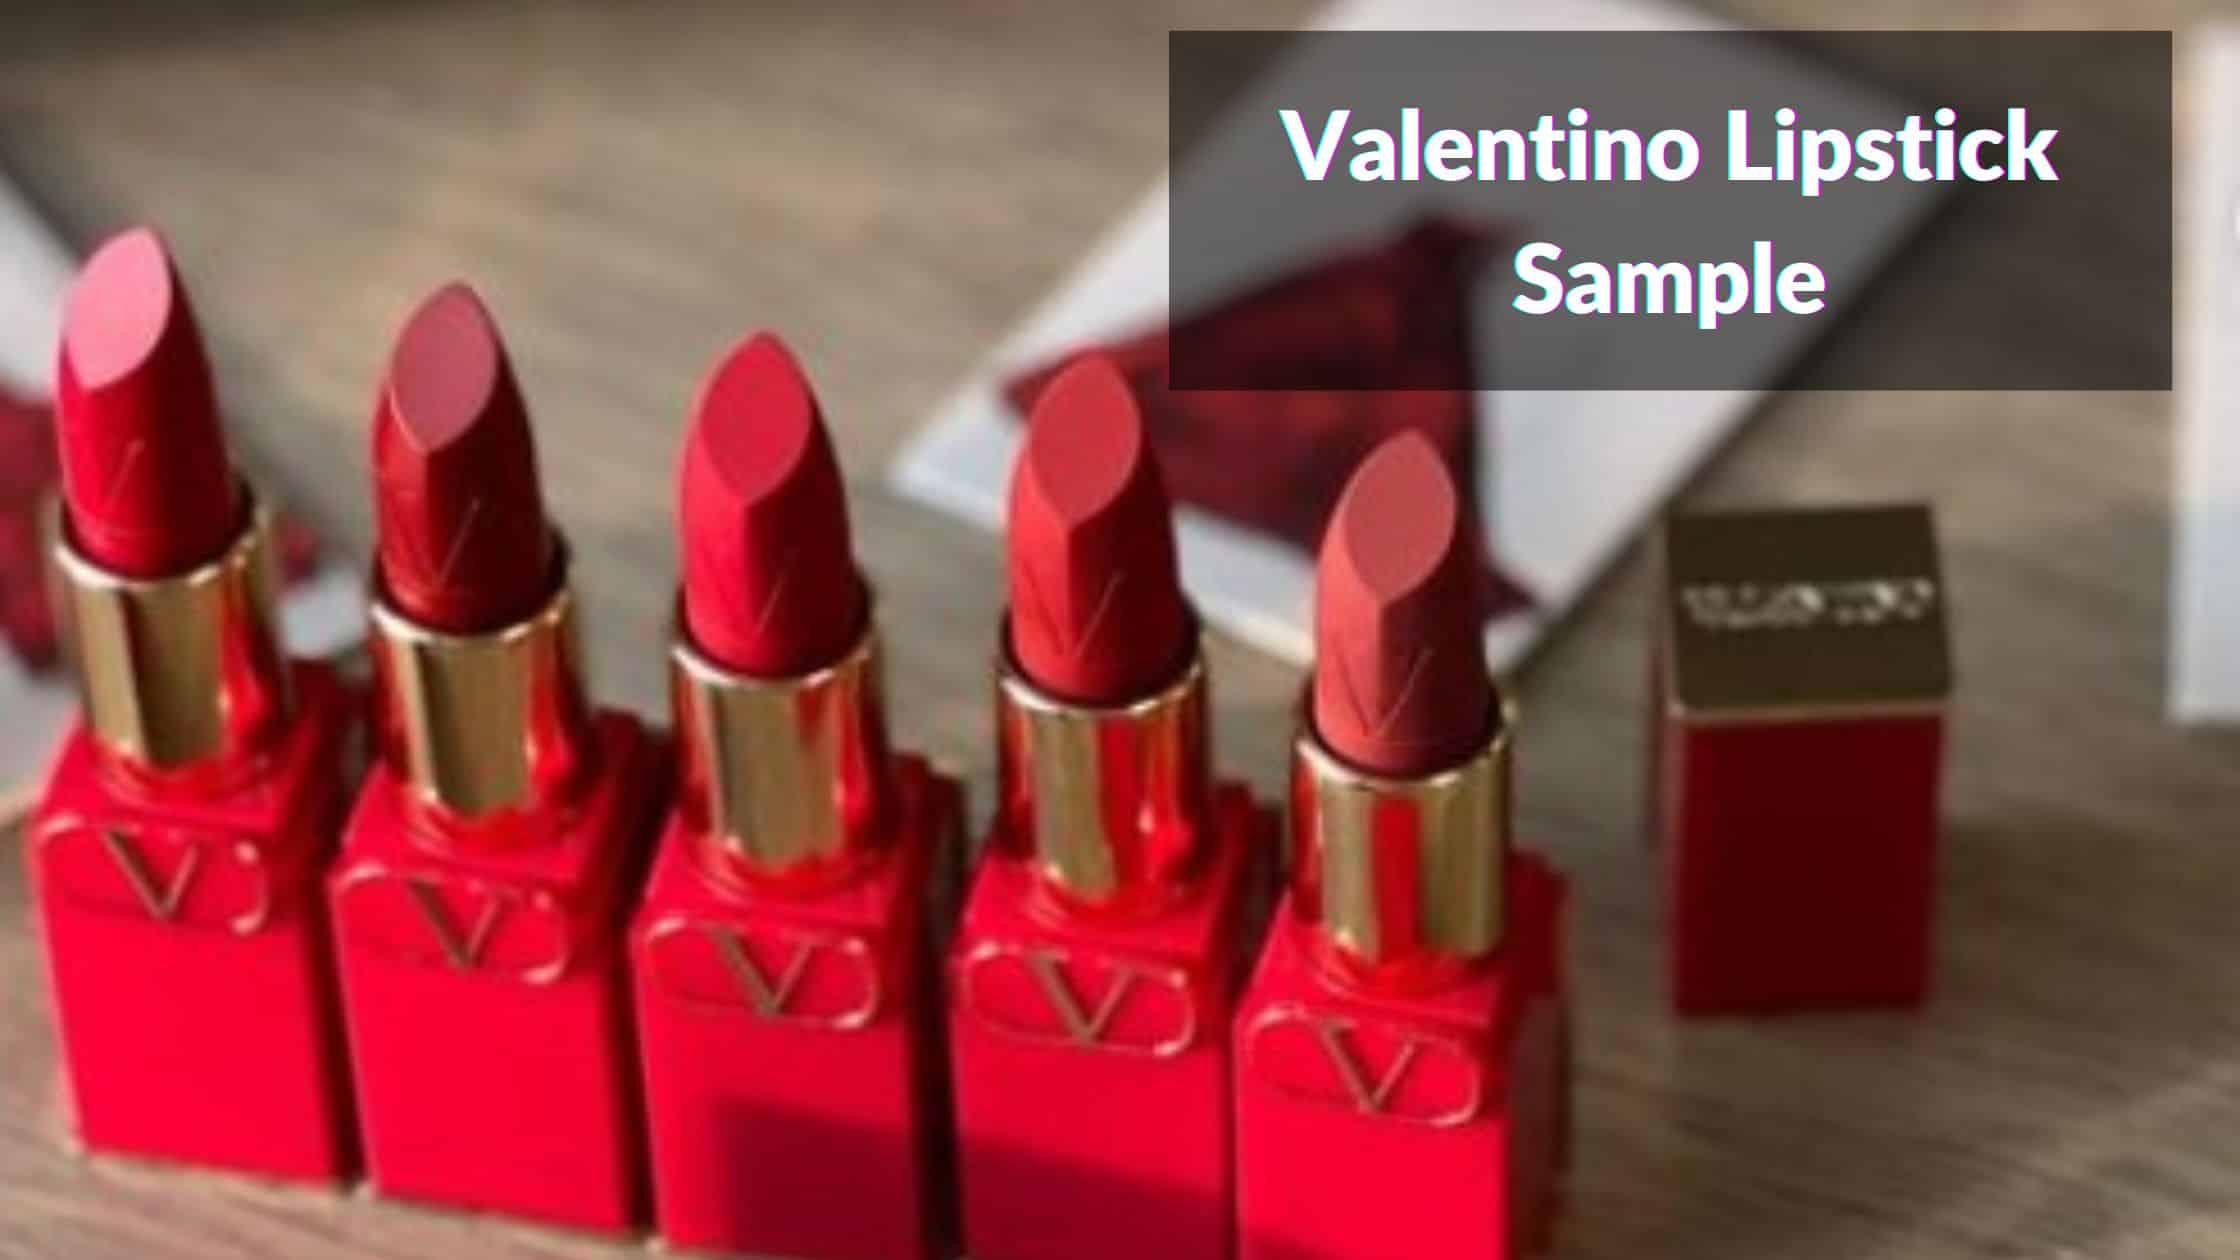 Valentino Lipstick Sample